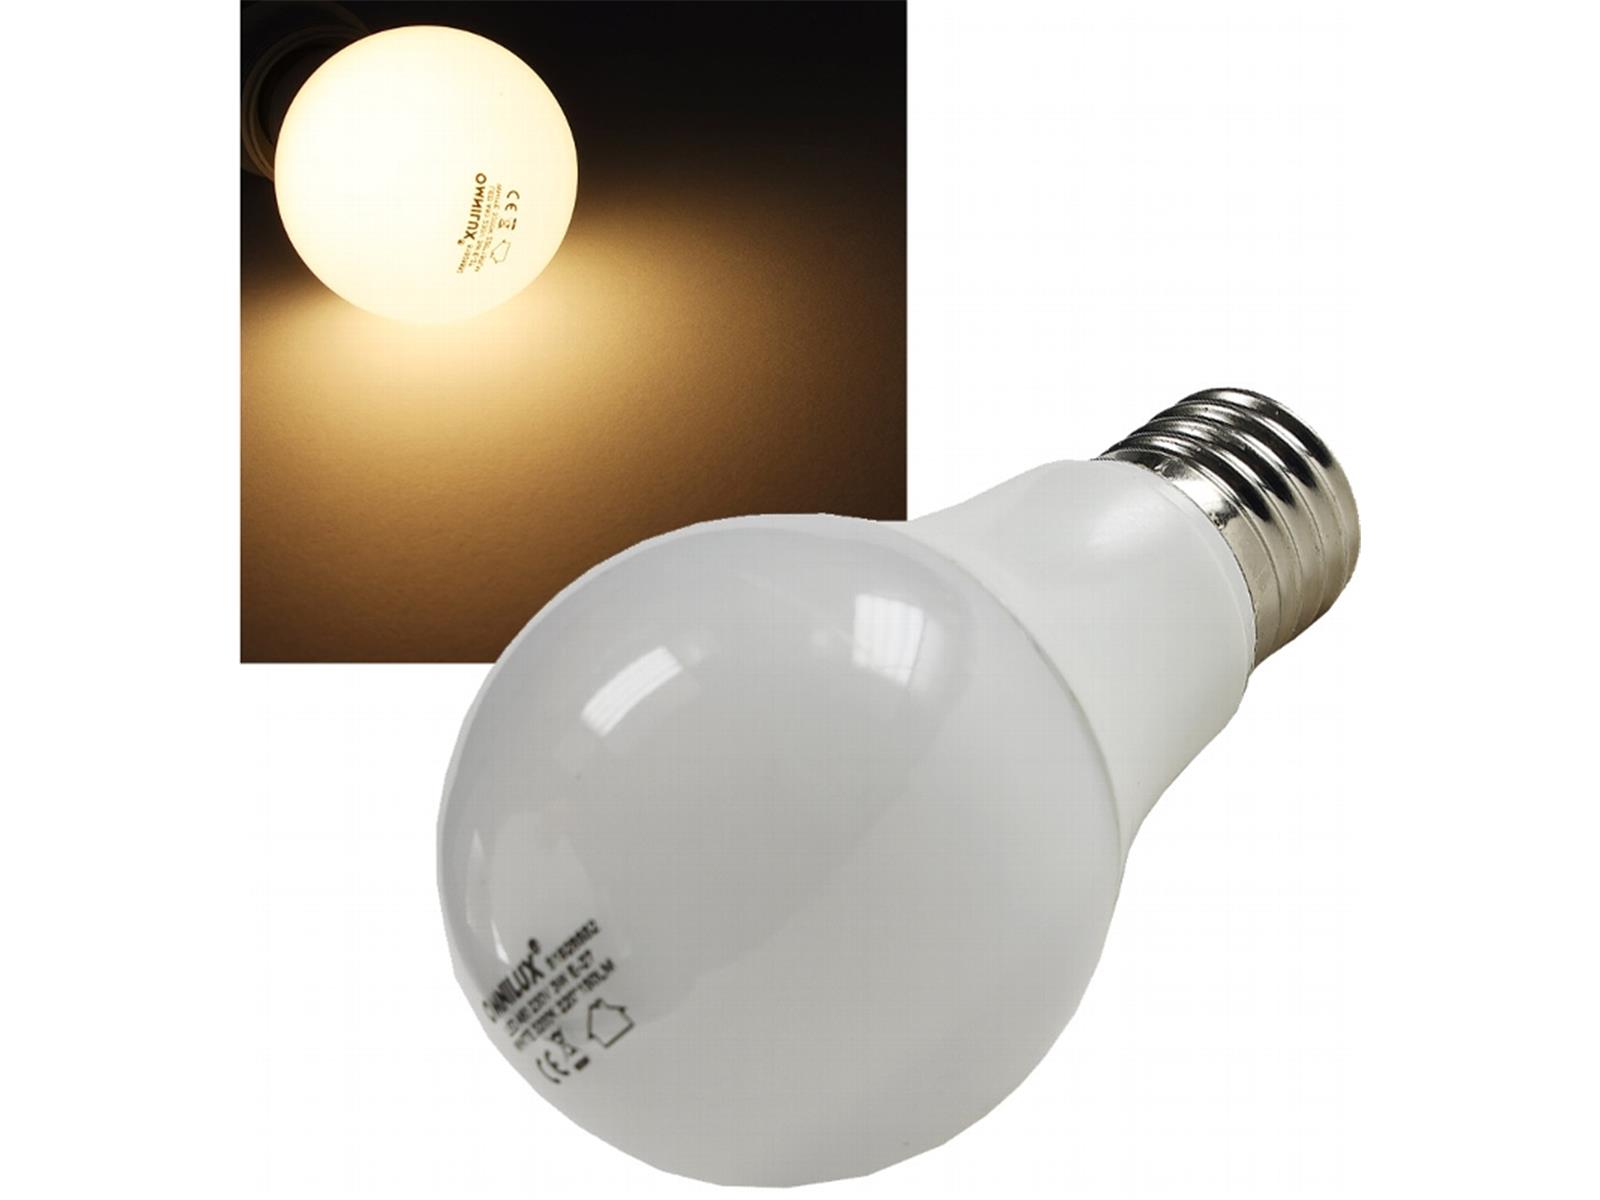 LED Glühlampe OMNILUX E27 3200k, 150lm, 230V / 3W, warmweiß